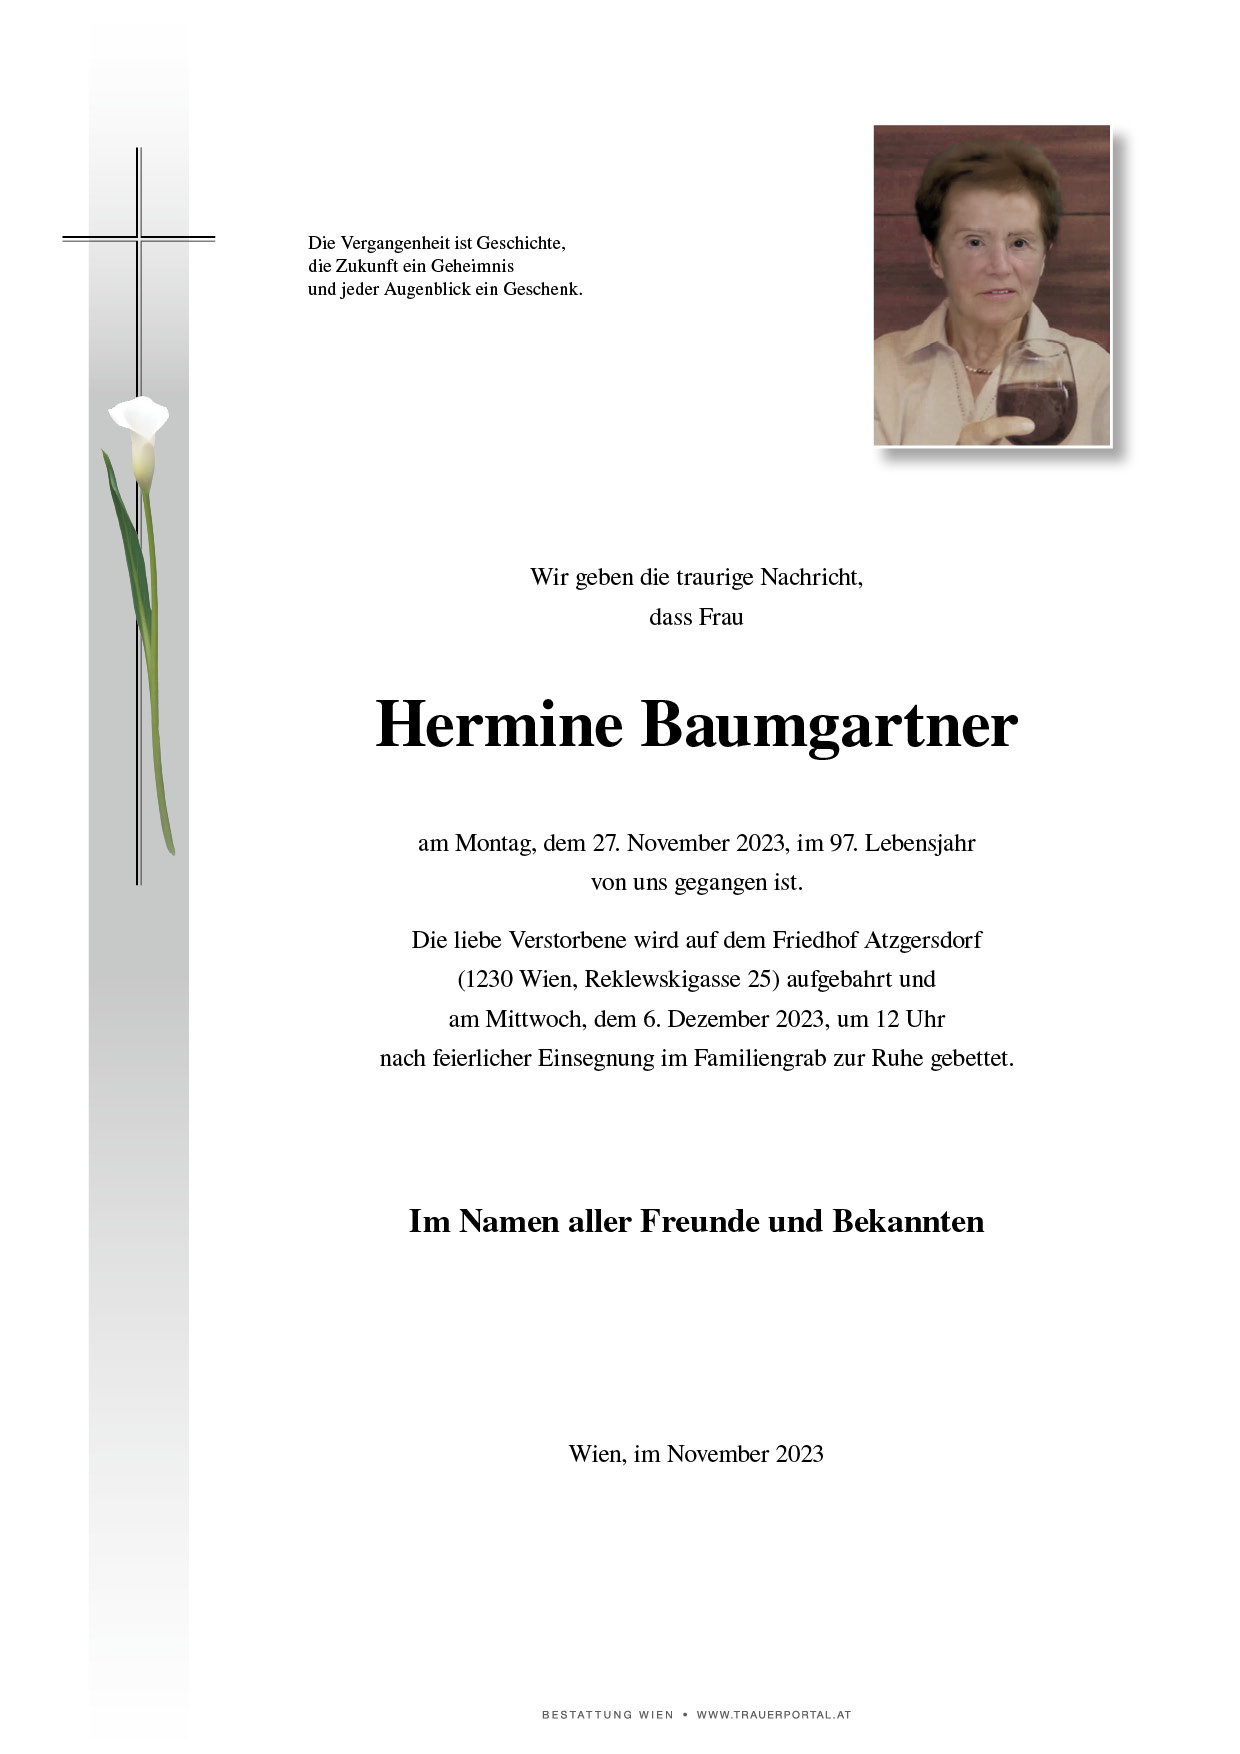 Hermine Baumgartner